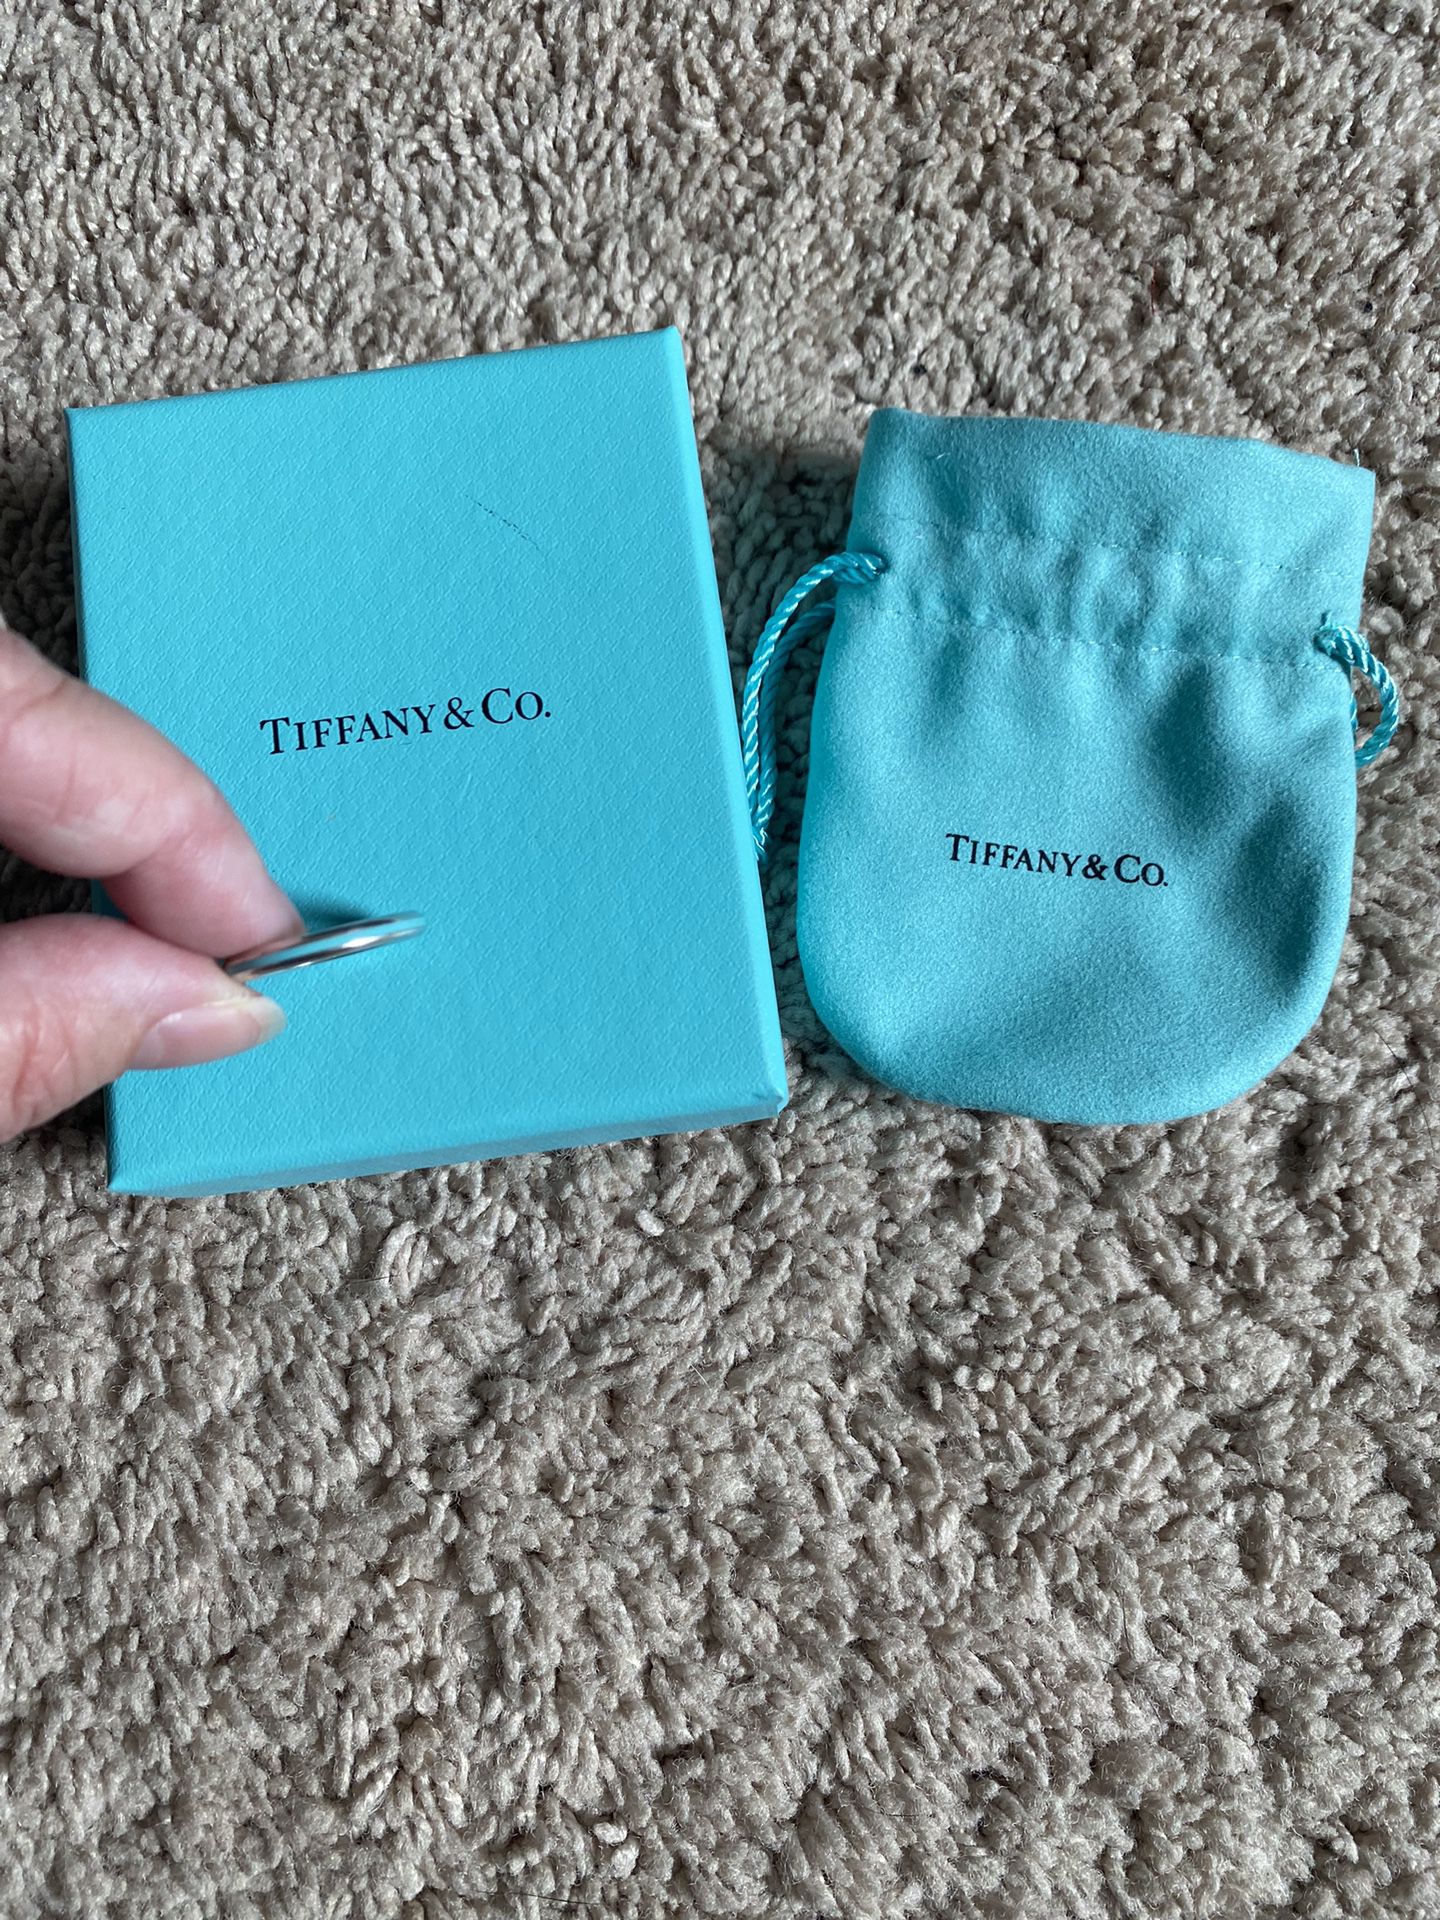 Tiffany & Co. Silver Ring with Tiffany Blue Enamel Stripe (Size 7)